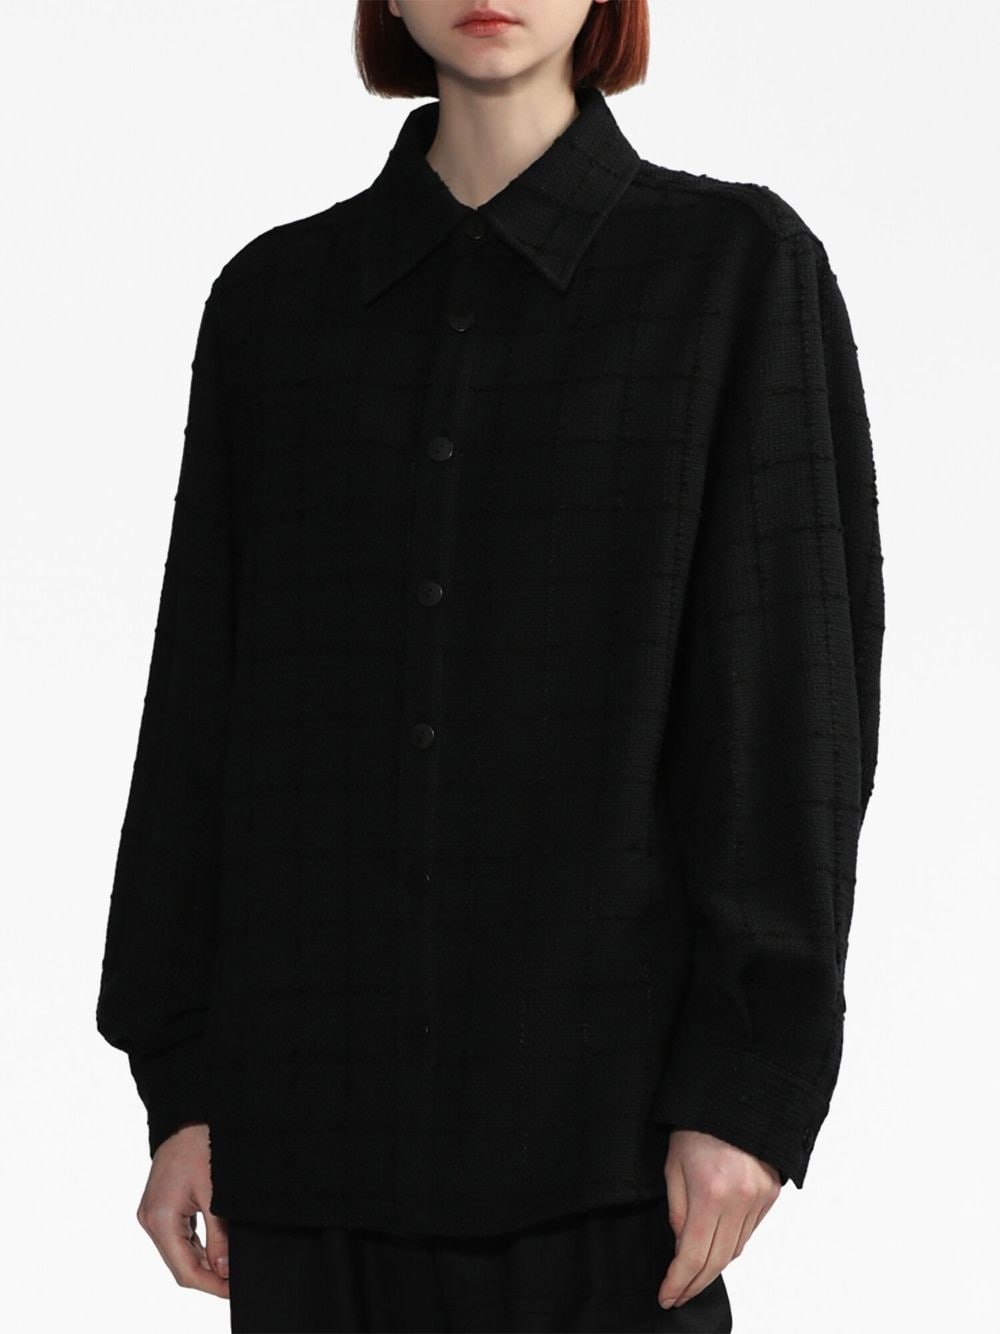 Lembu checkered shirt - 2